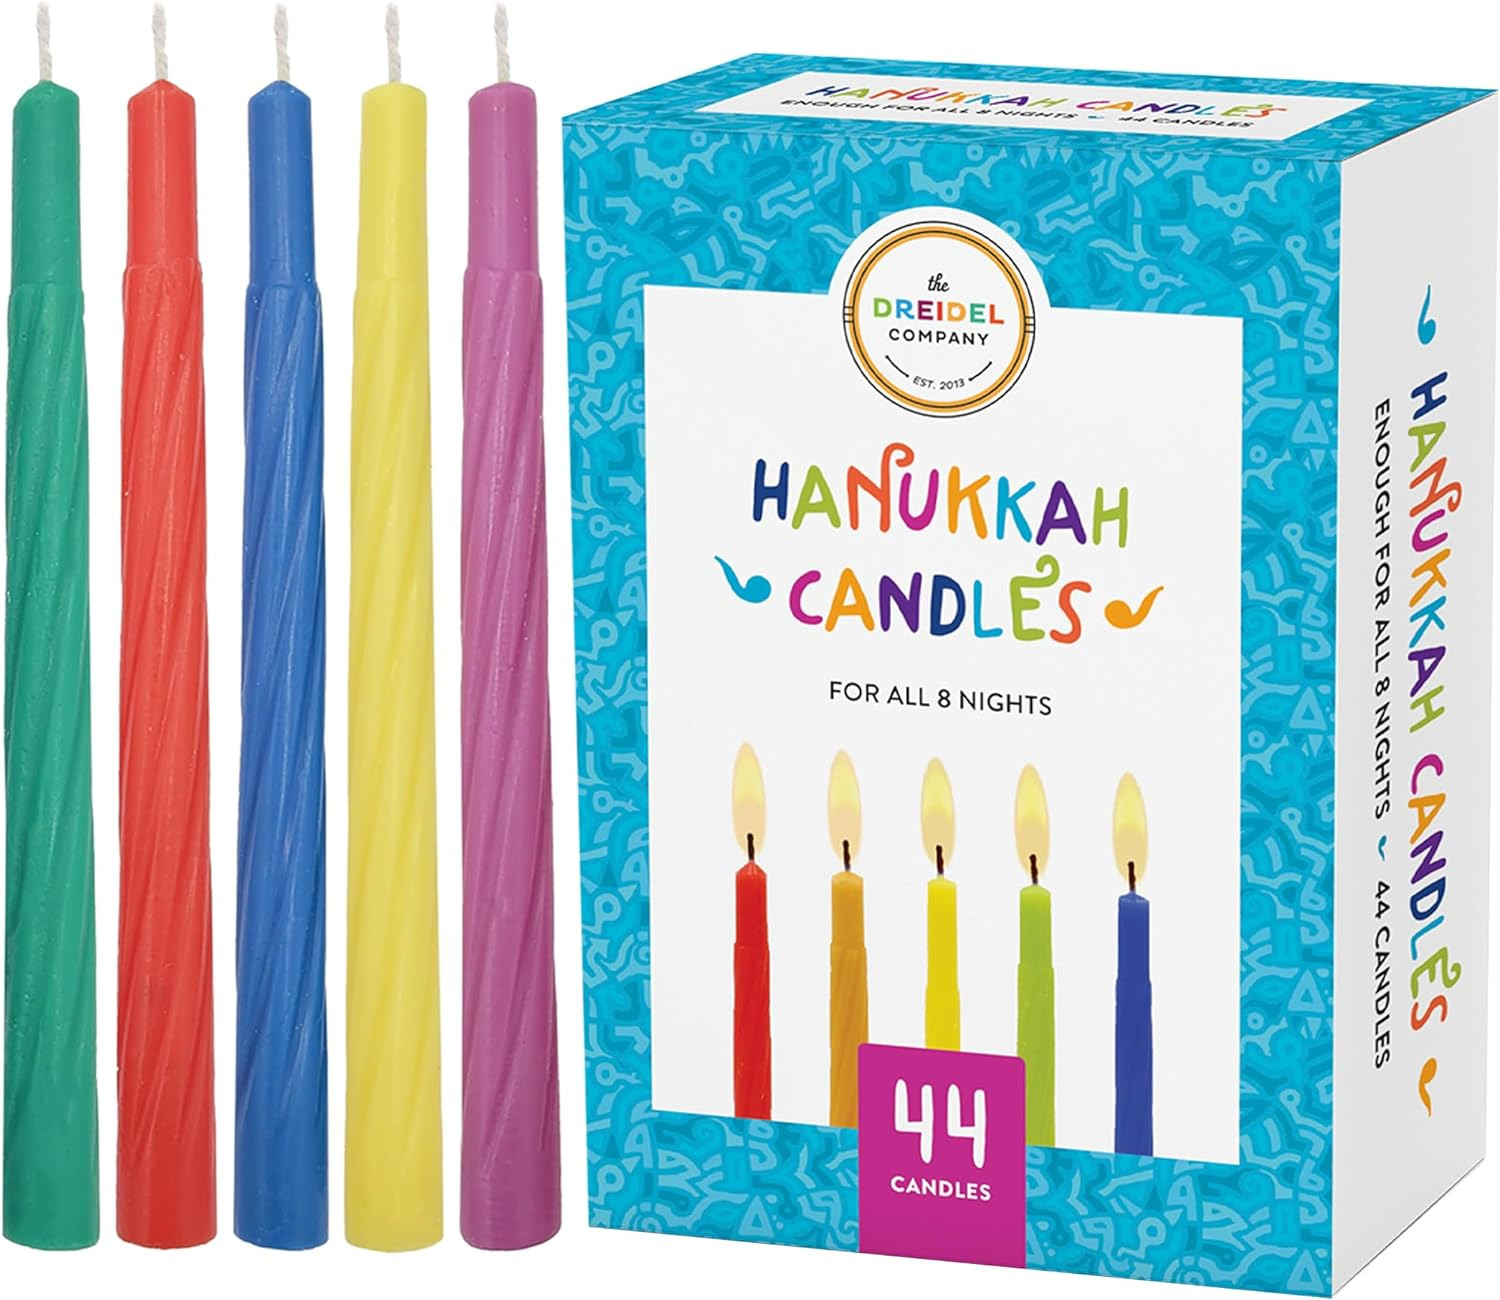 Menorah Candles Chanukah Candles 44 Colorful Hanukkah Candles for All 8 Nights o